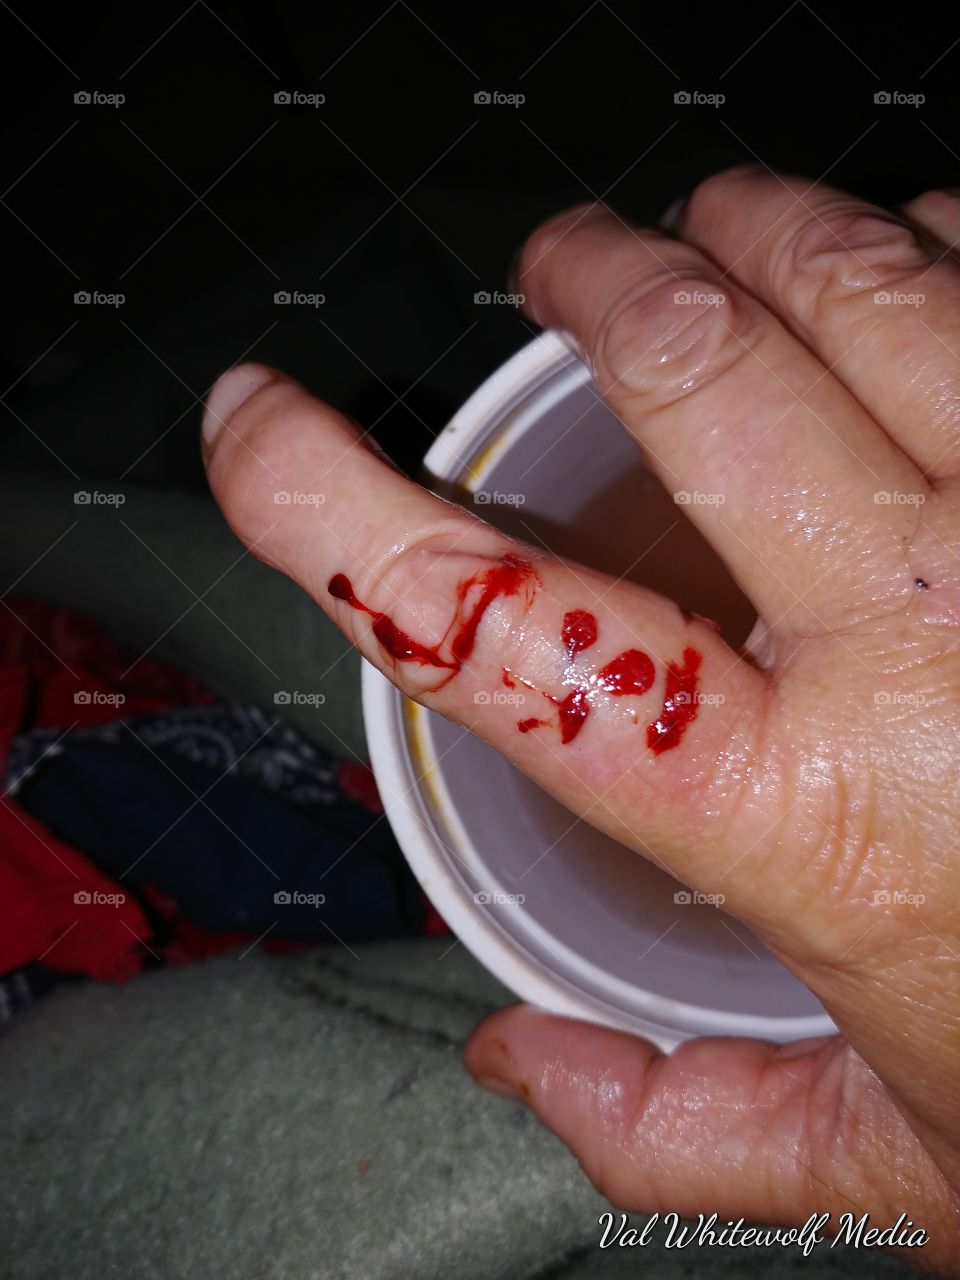 cat bite cup
blood hand finger